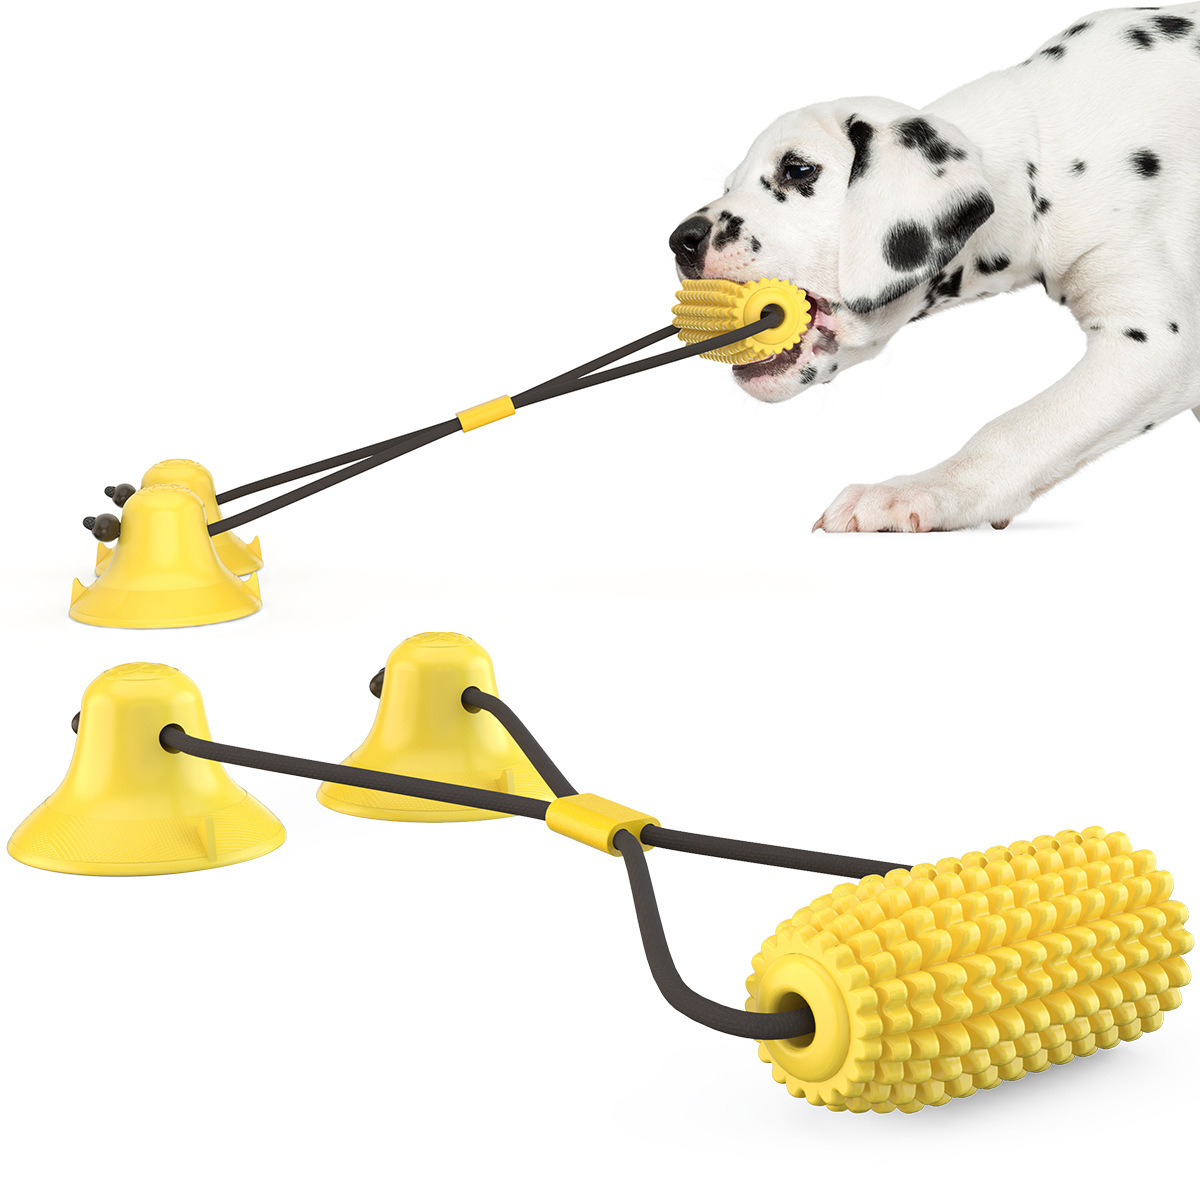 Multifunction Pet corn Molar Bite Toy